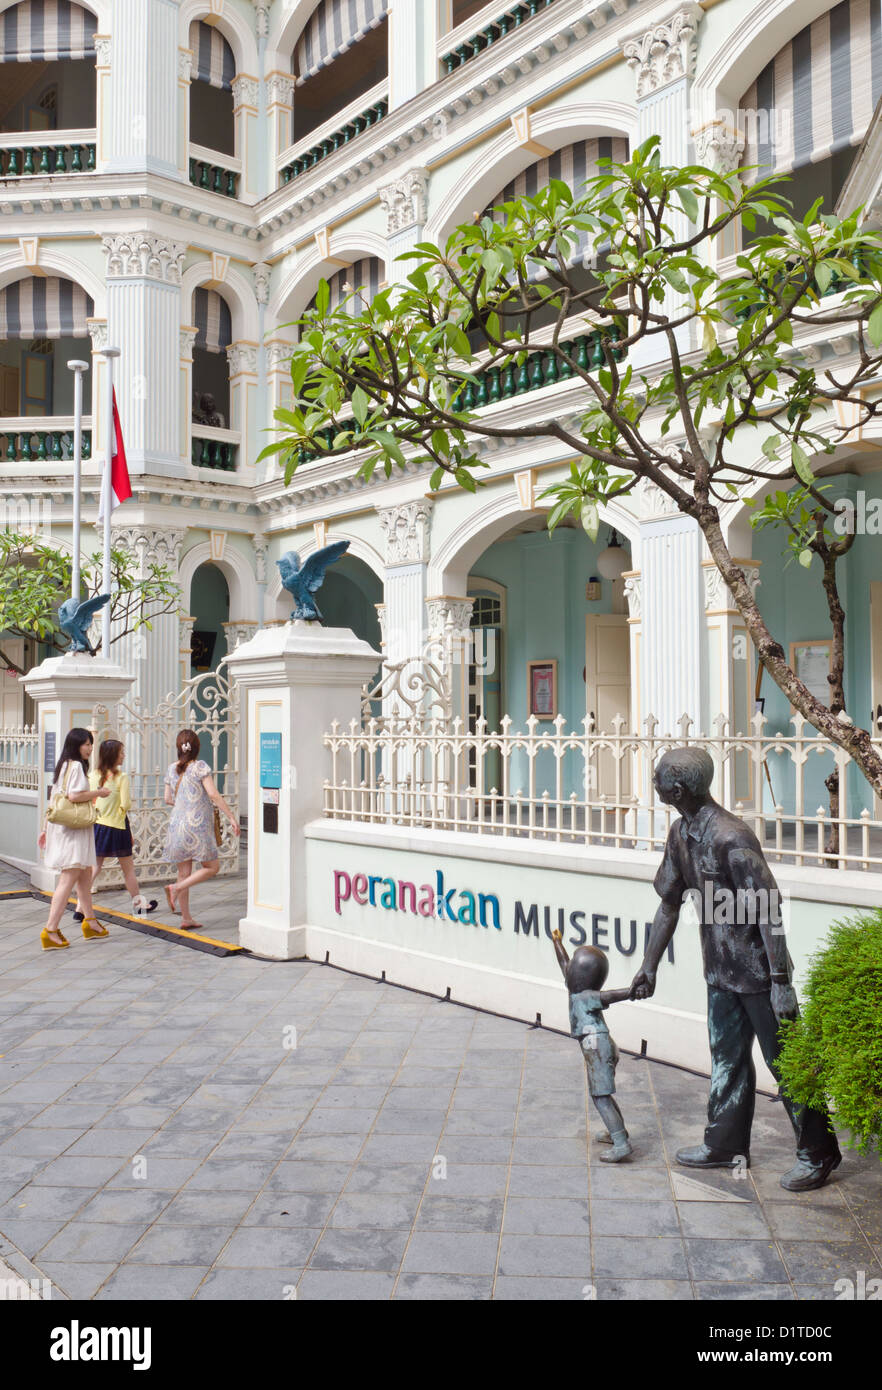 Tourists entering the Peranakan Museum of Singapore Stock Photo